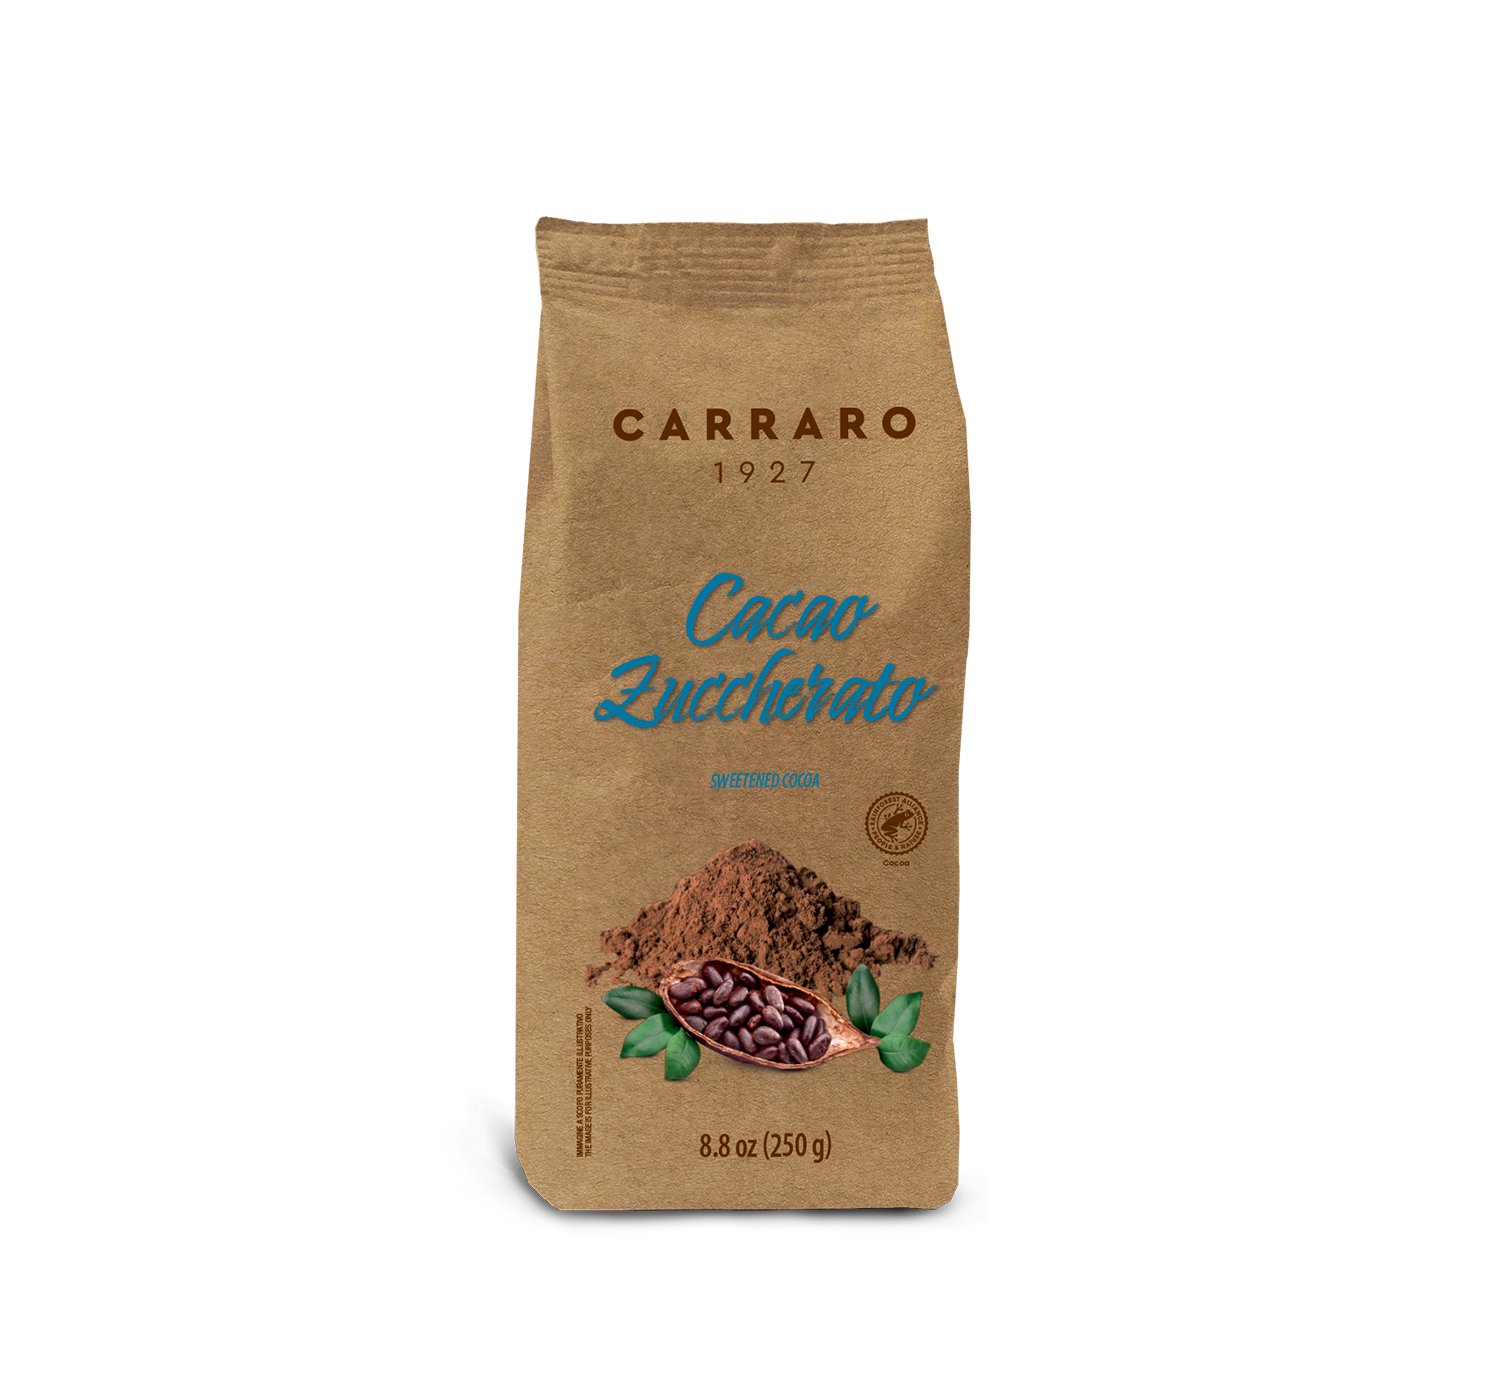 Casa - Cacao zuccherato – 250 g - Shop online Caffè Carraro